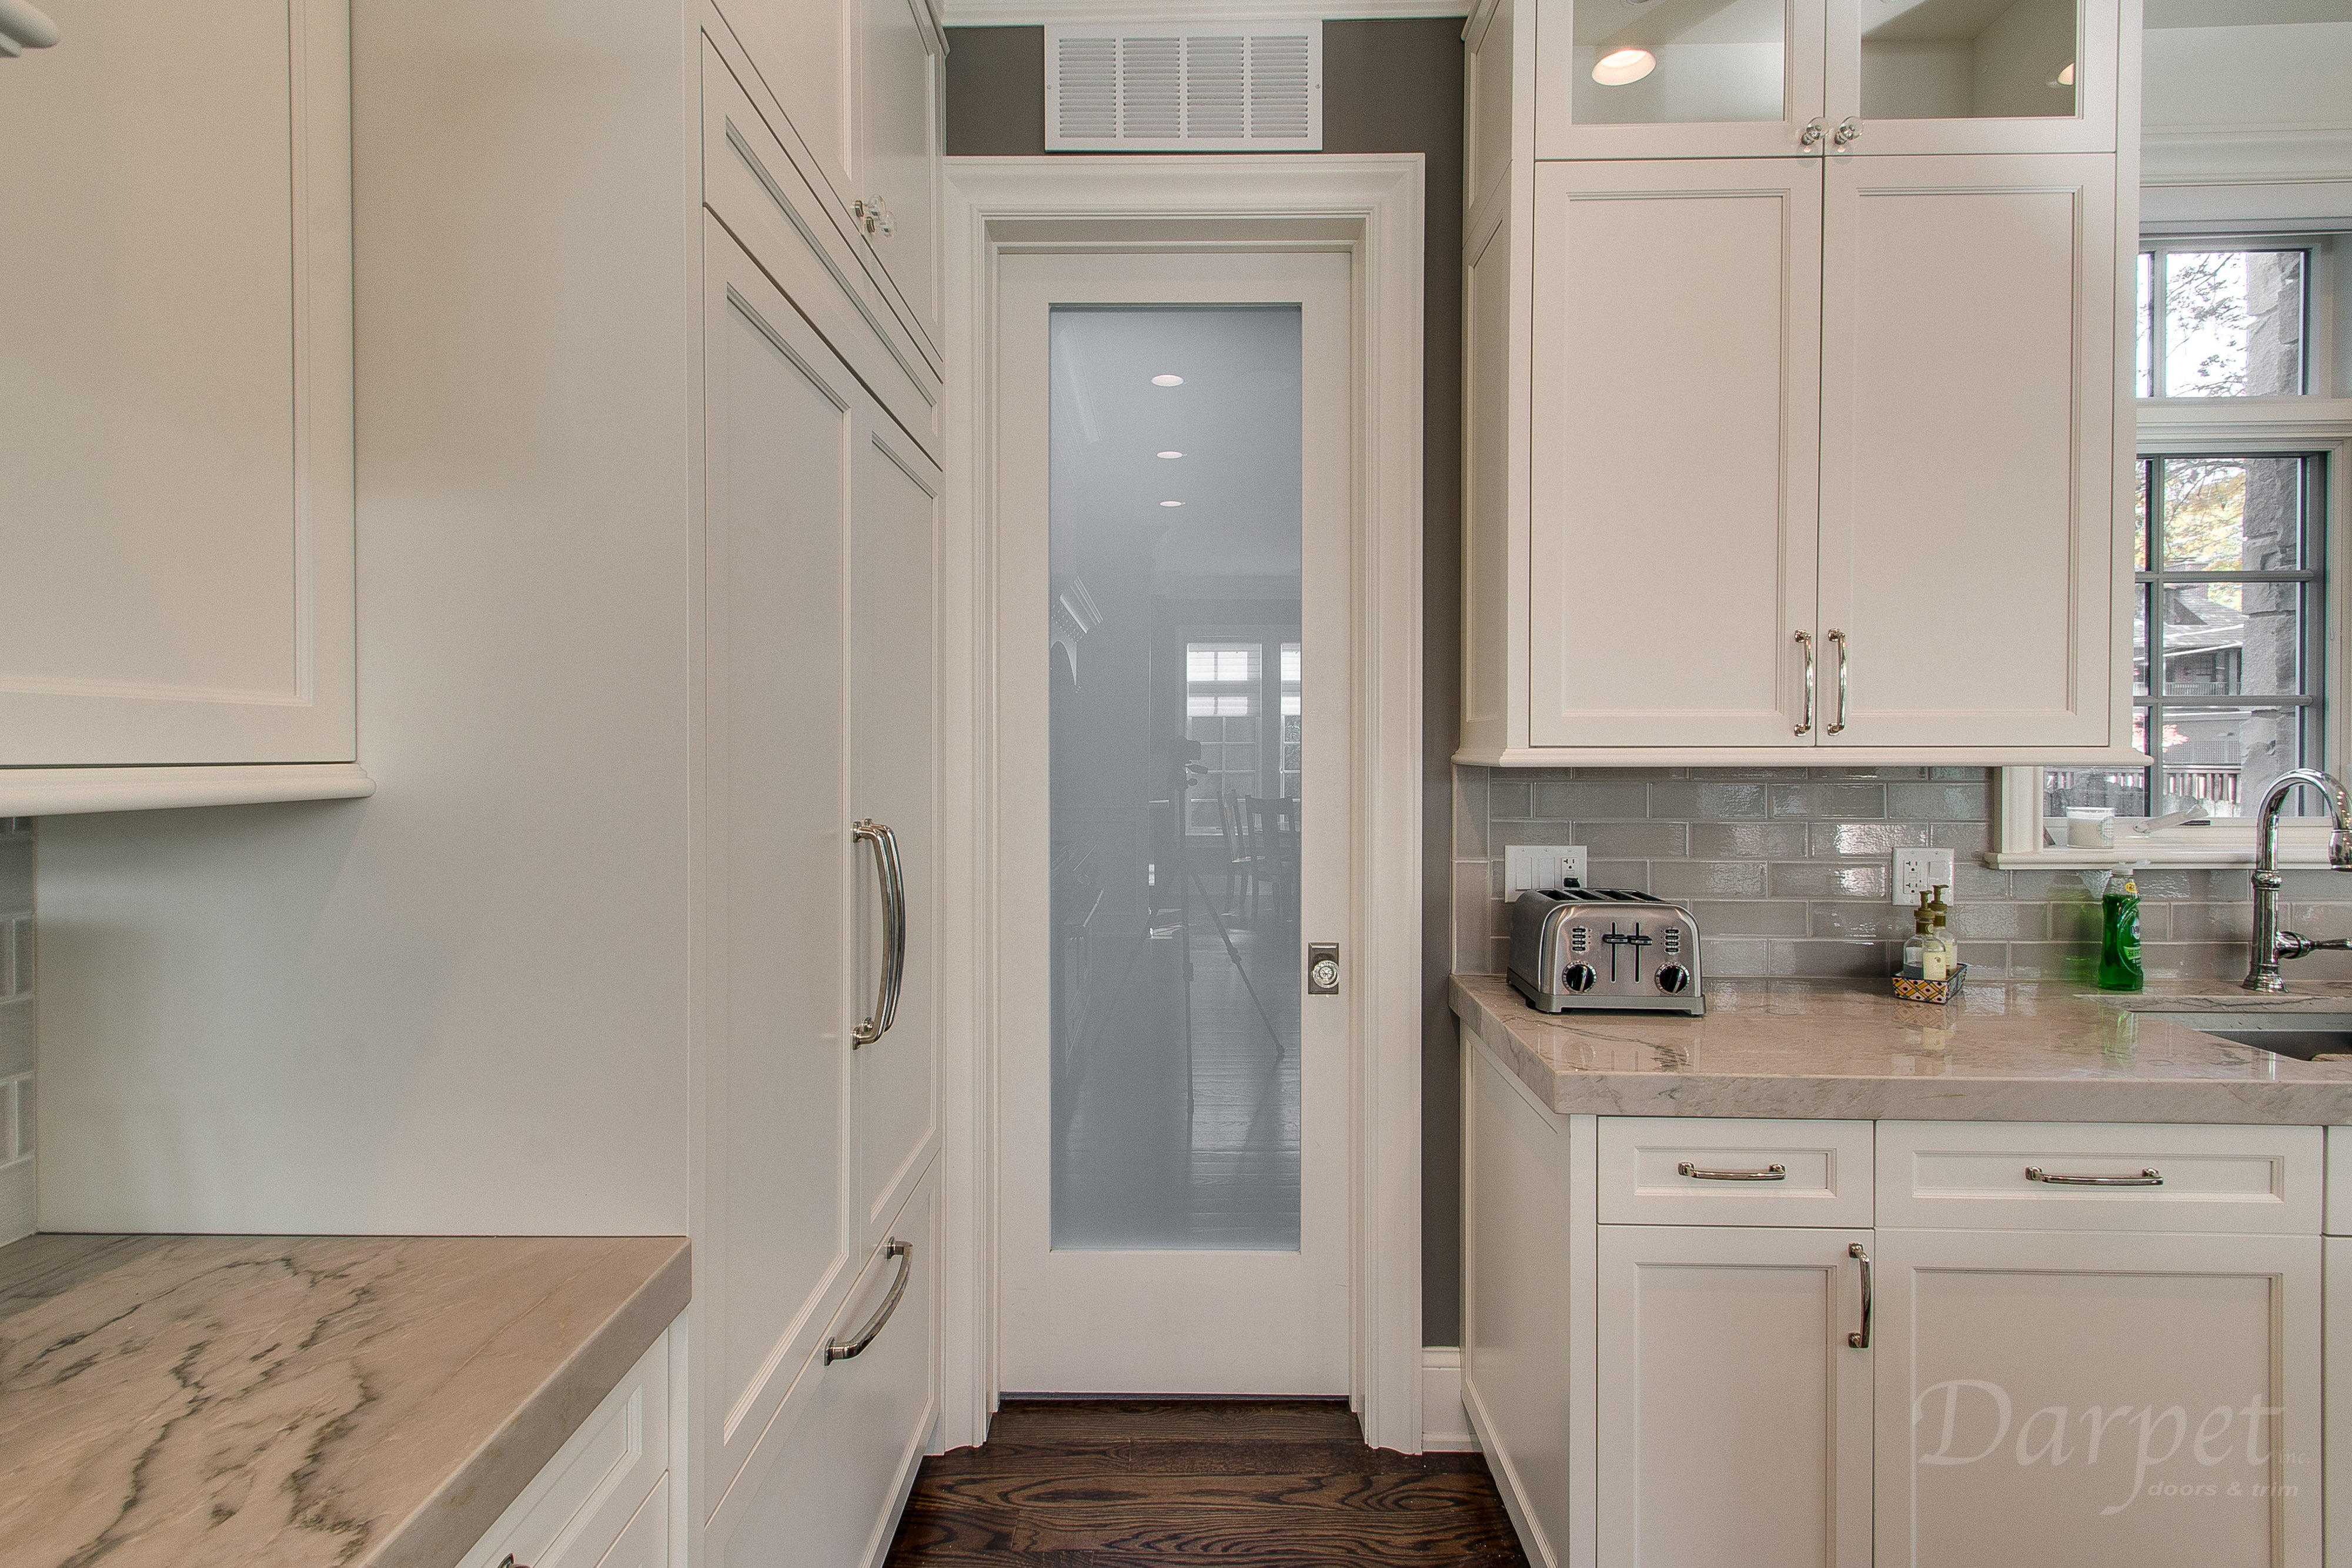 1 lite french frosted pantry door - Darpet Doors - Chicago - Elk Grove Village - Illinois